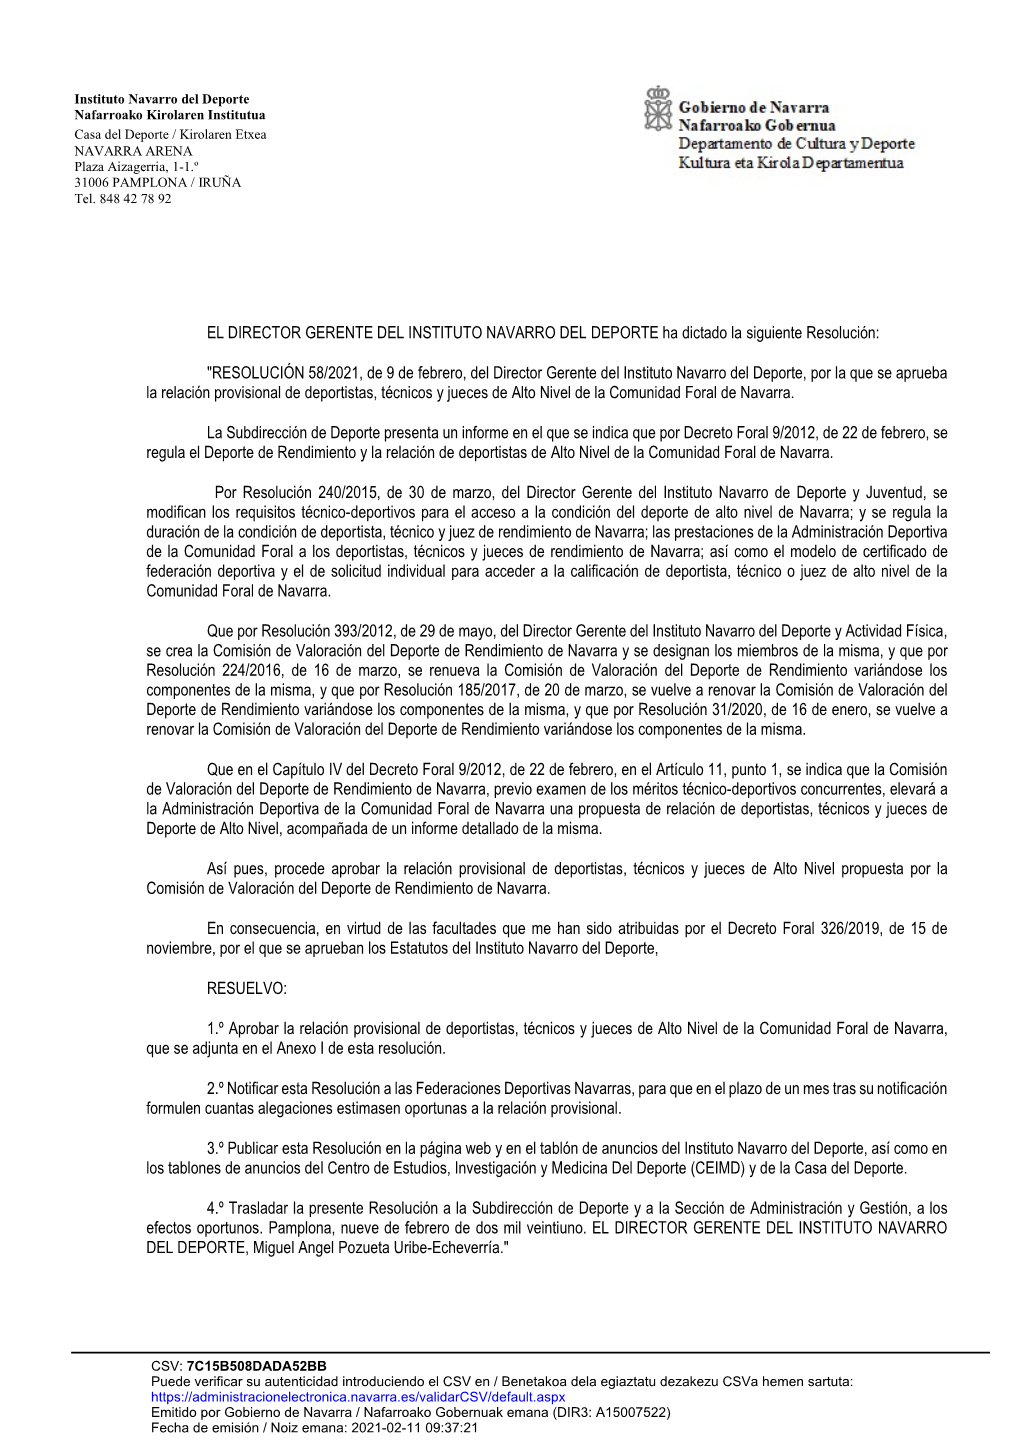 Relacion Provisional Deportistas Alto Nivel Navarra 2021.Pdf